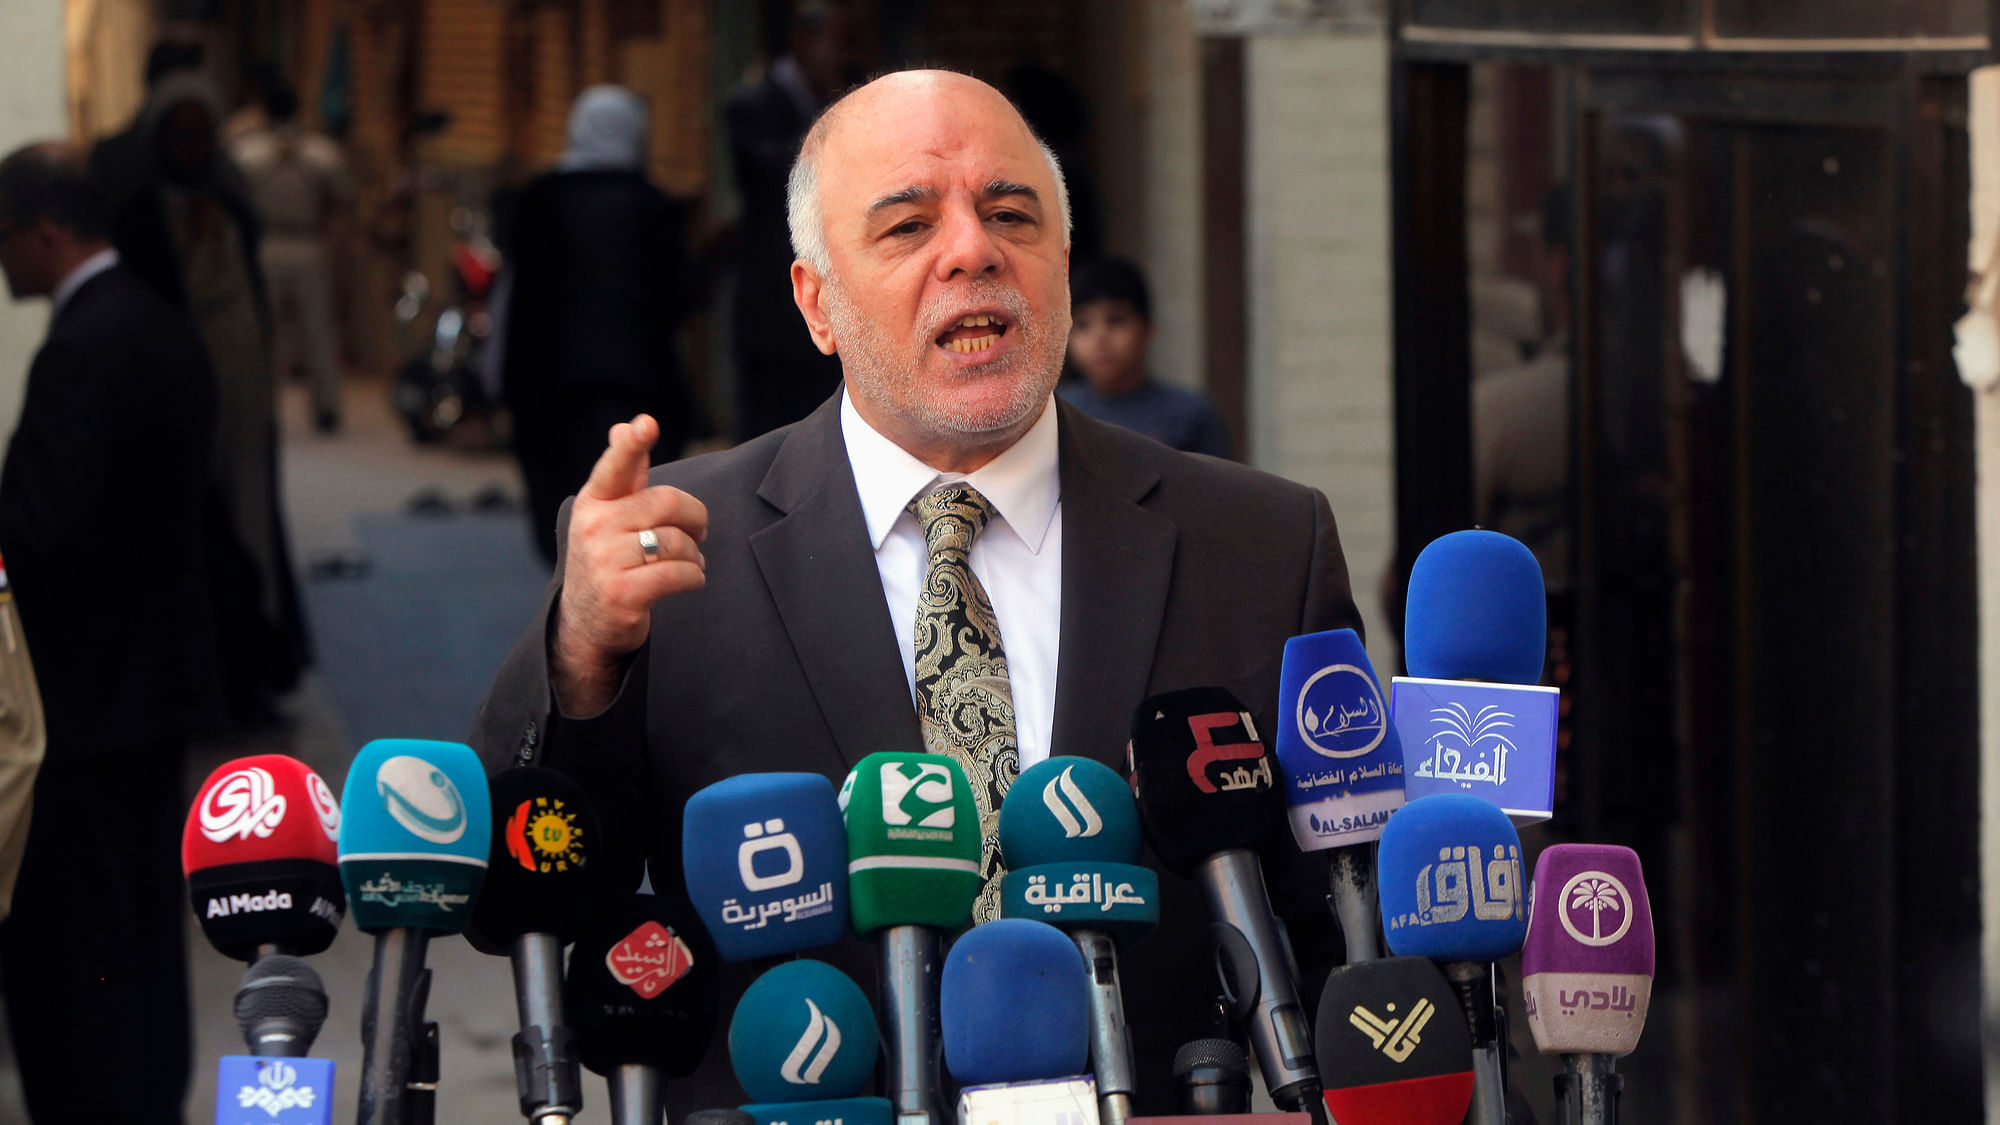 File photo of Iraqi Prime Minister Haider al-Abadi.